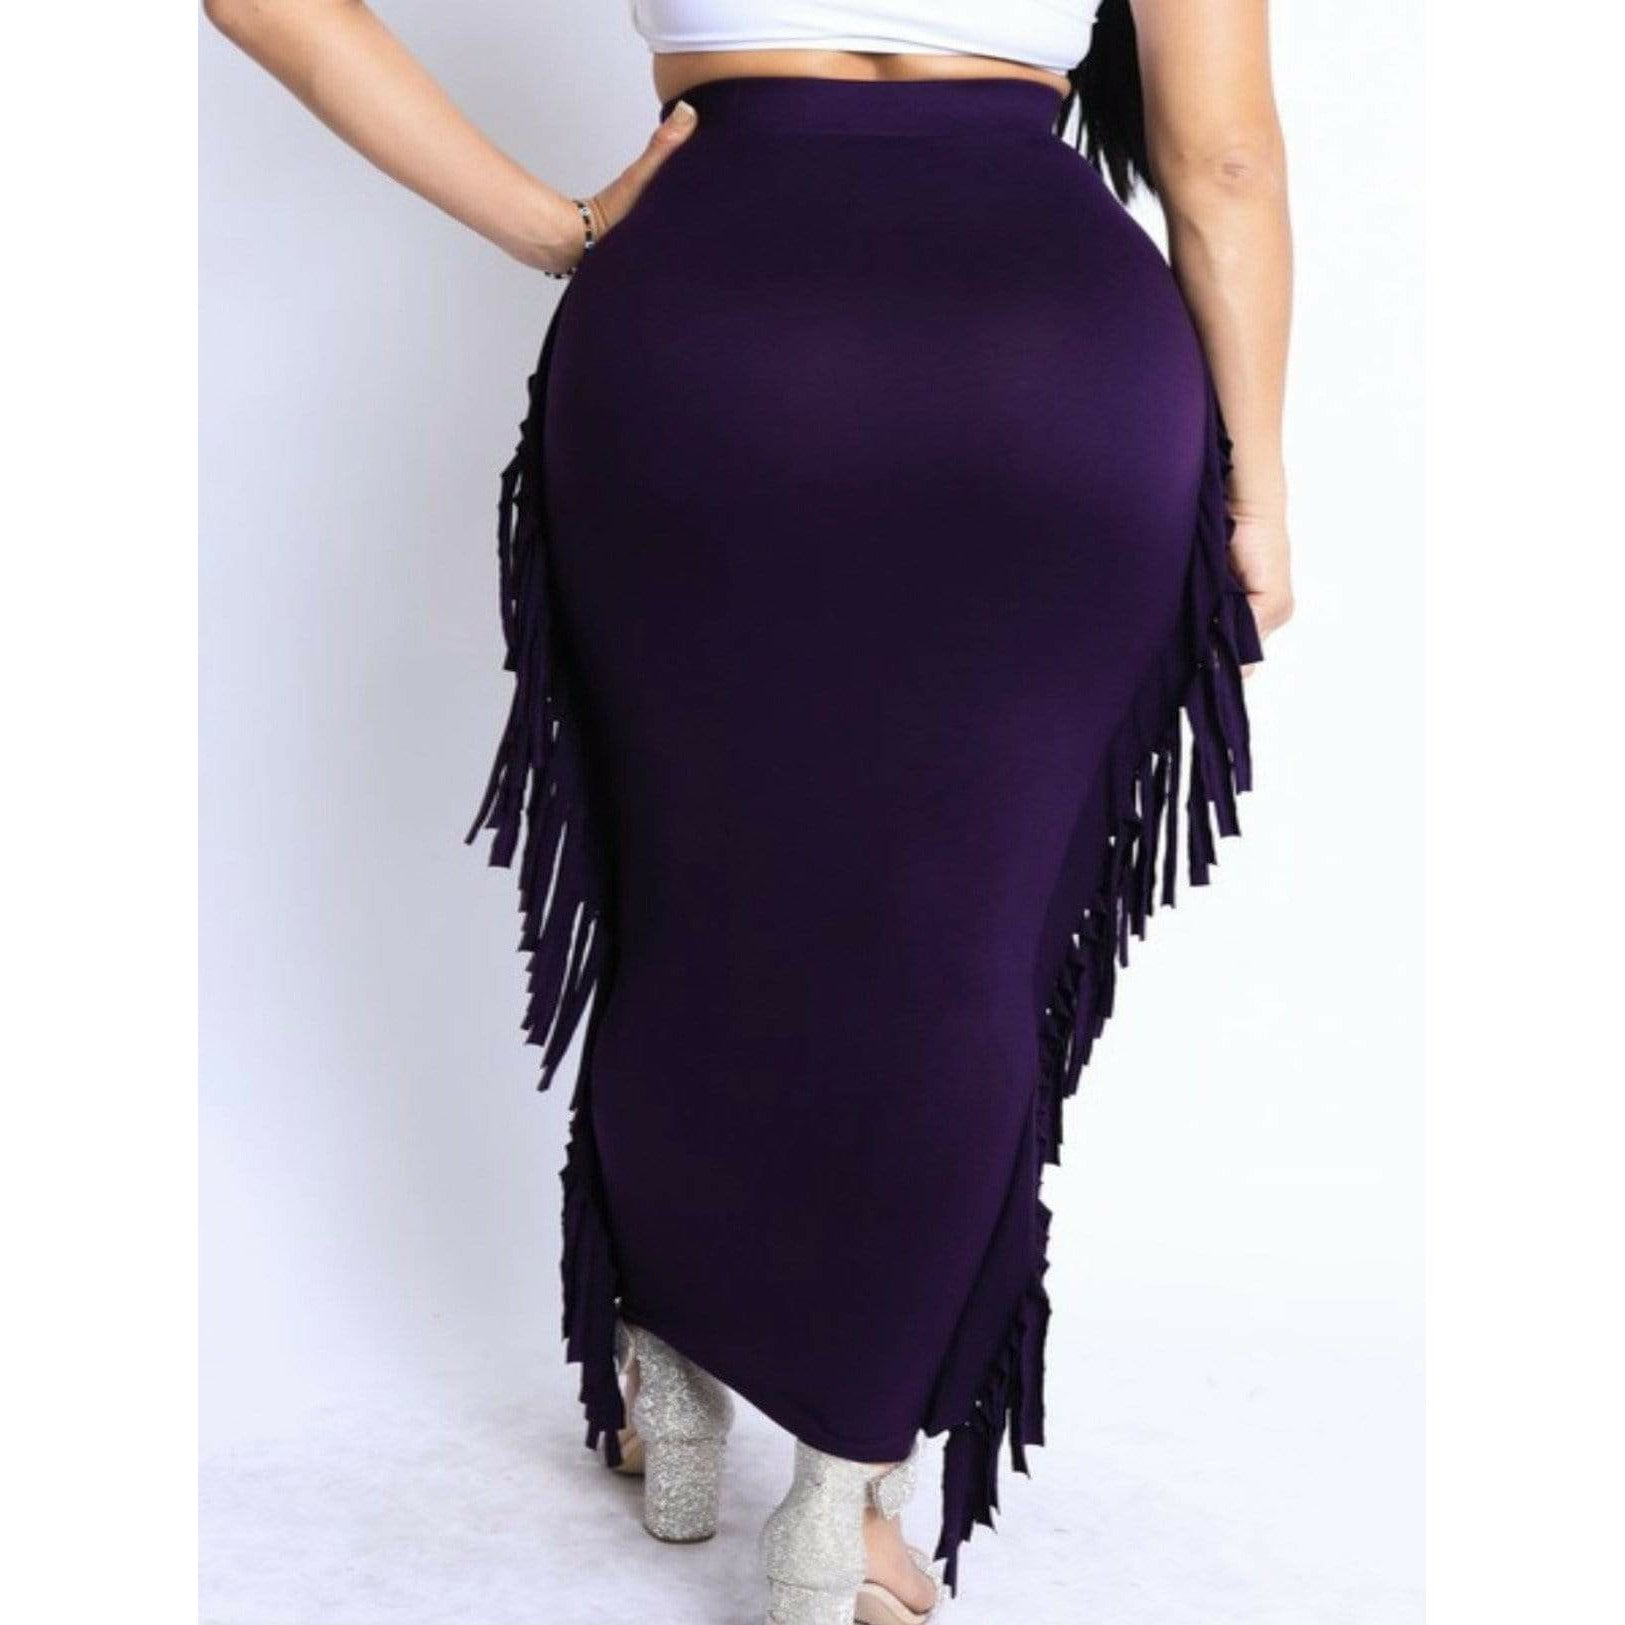 Purple Fringe Skirt